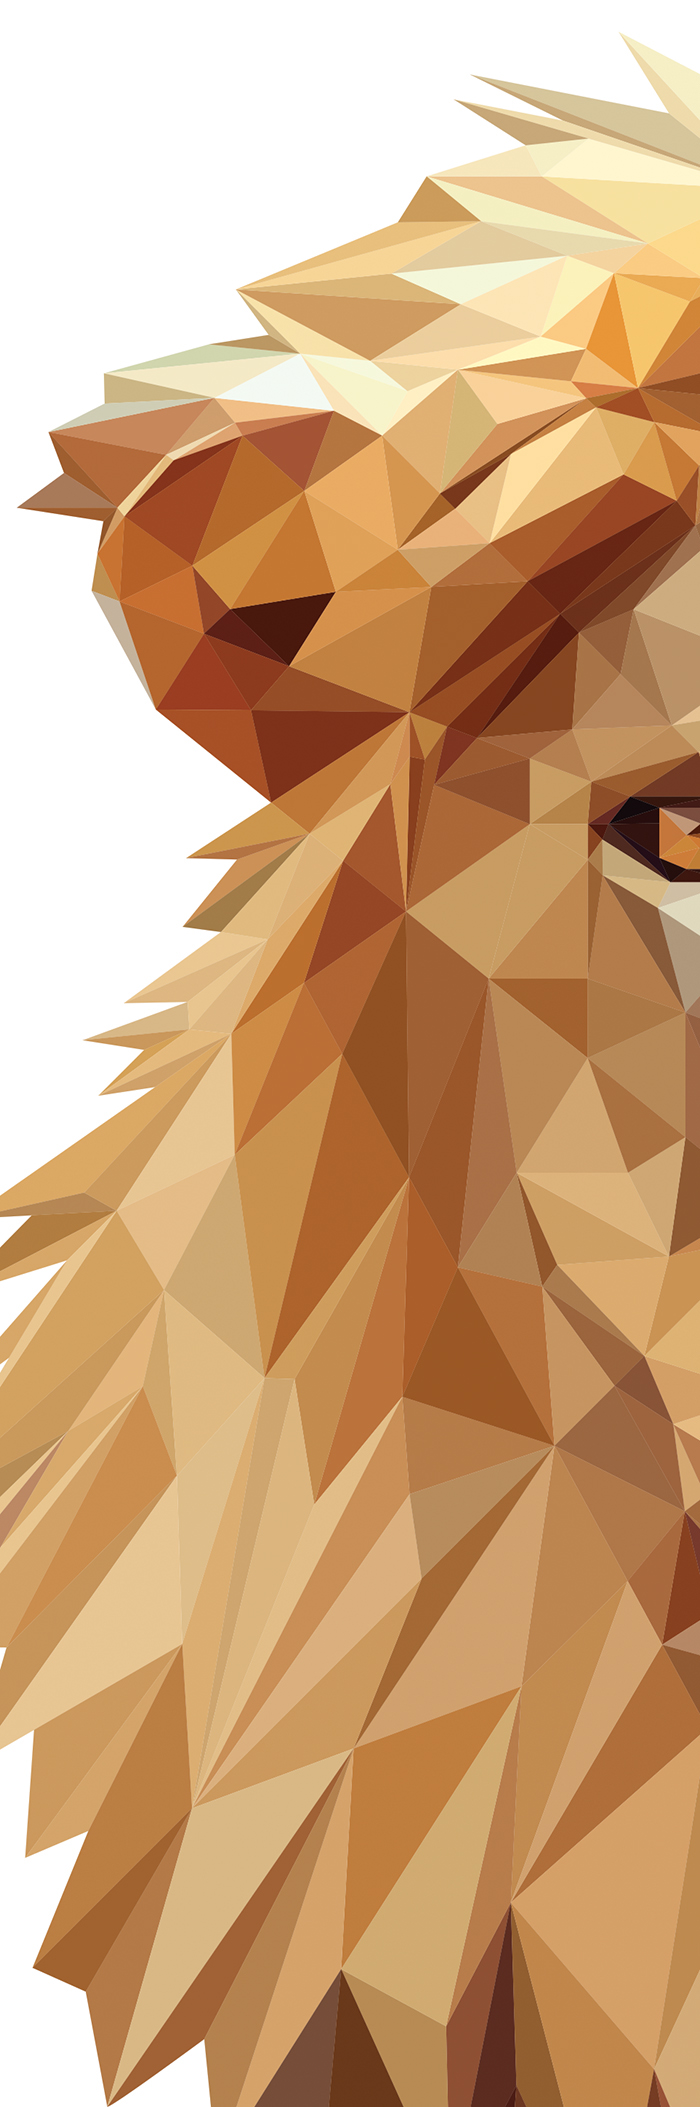 lion lion face anamoly aniline indy-visual.com polygon line animal face animal